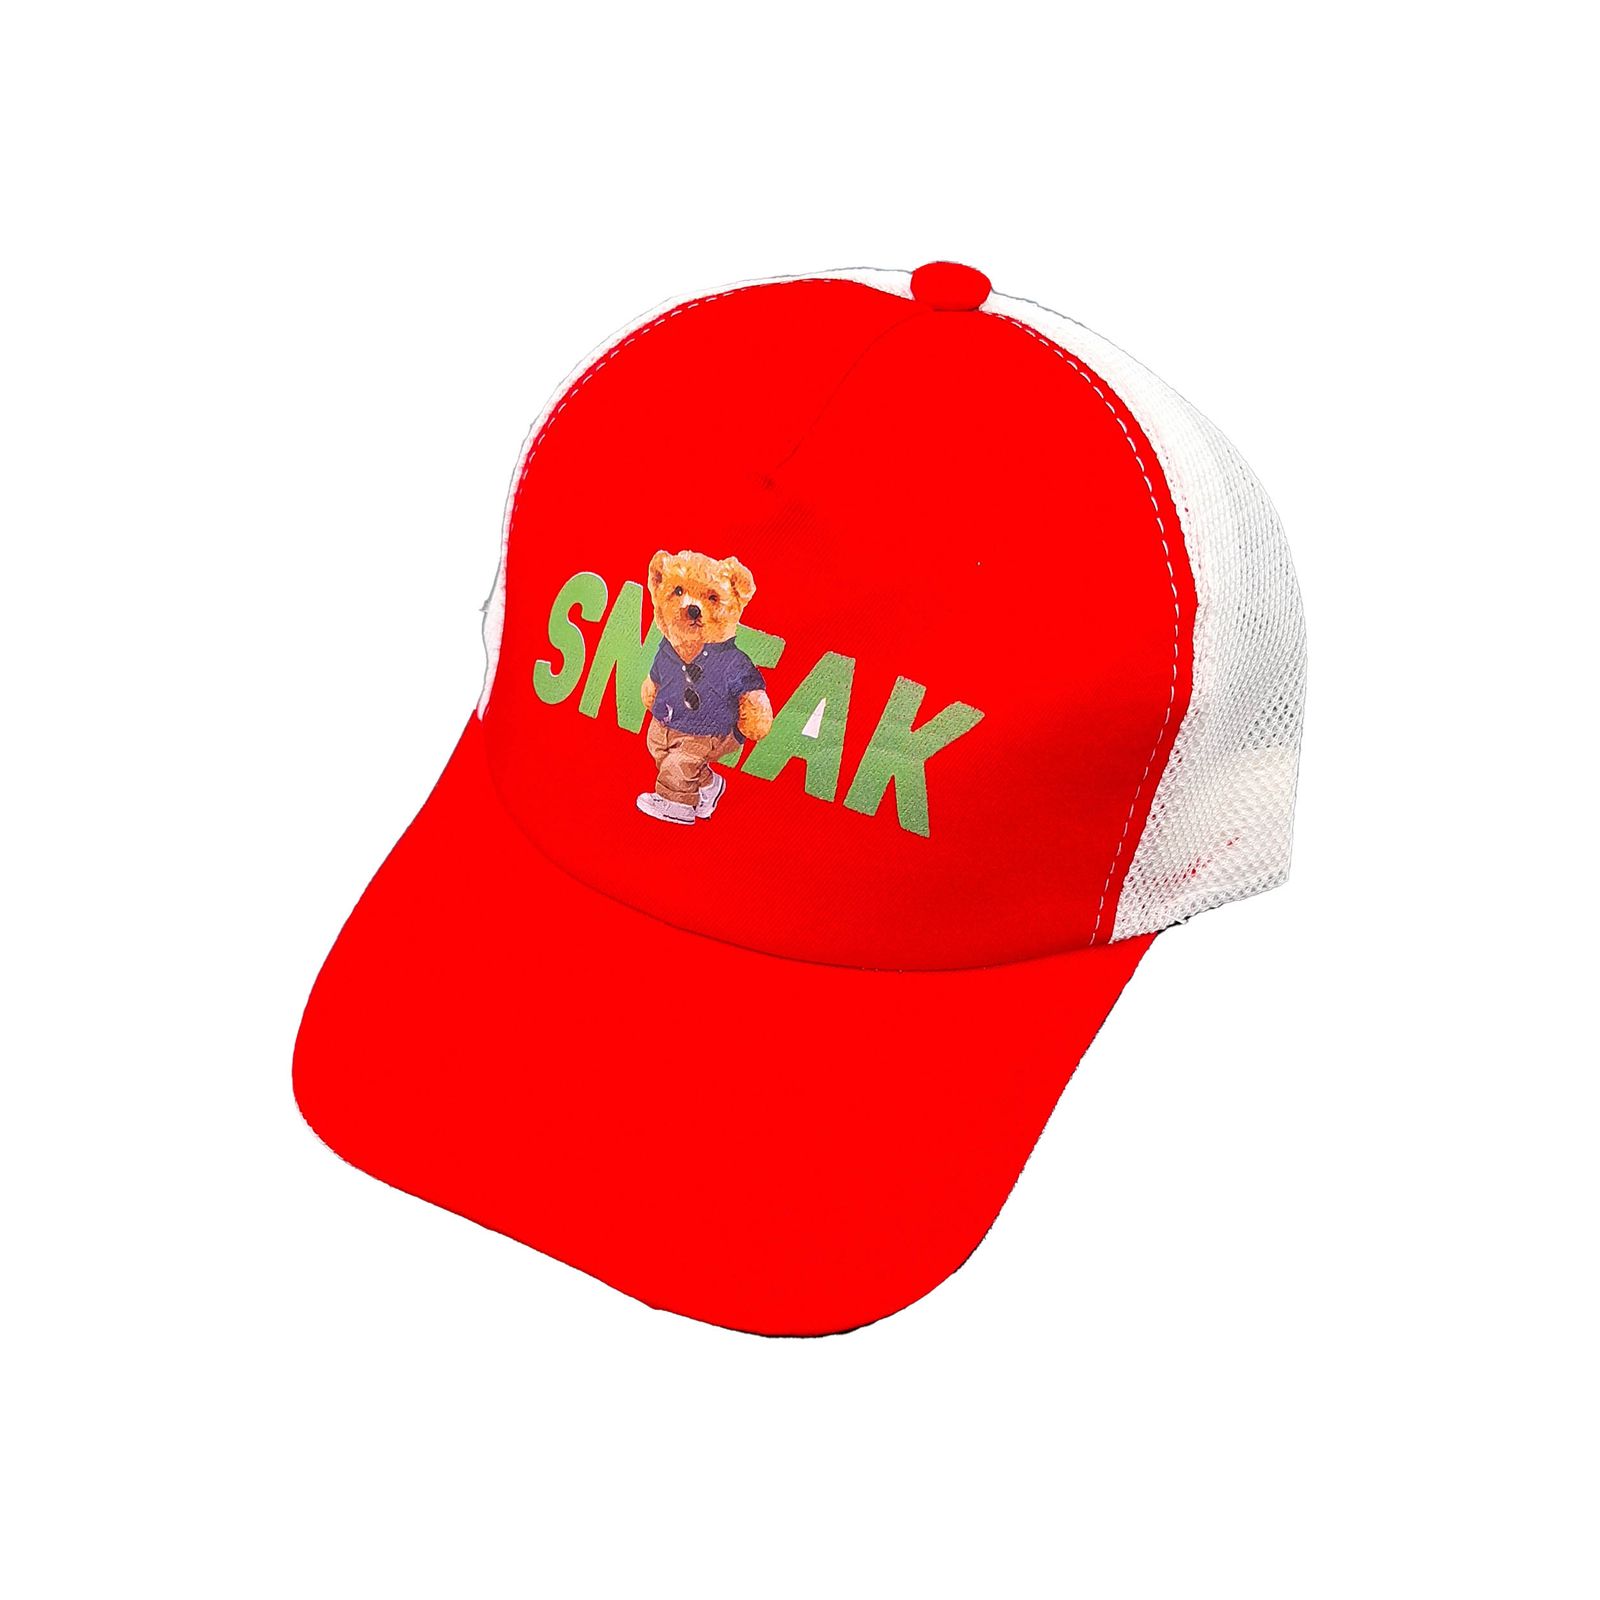 کلاه کپ بچگانه مدل SNAK کد 1210 رنگ قرمز -  - 2